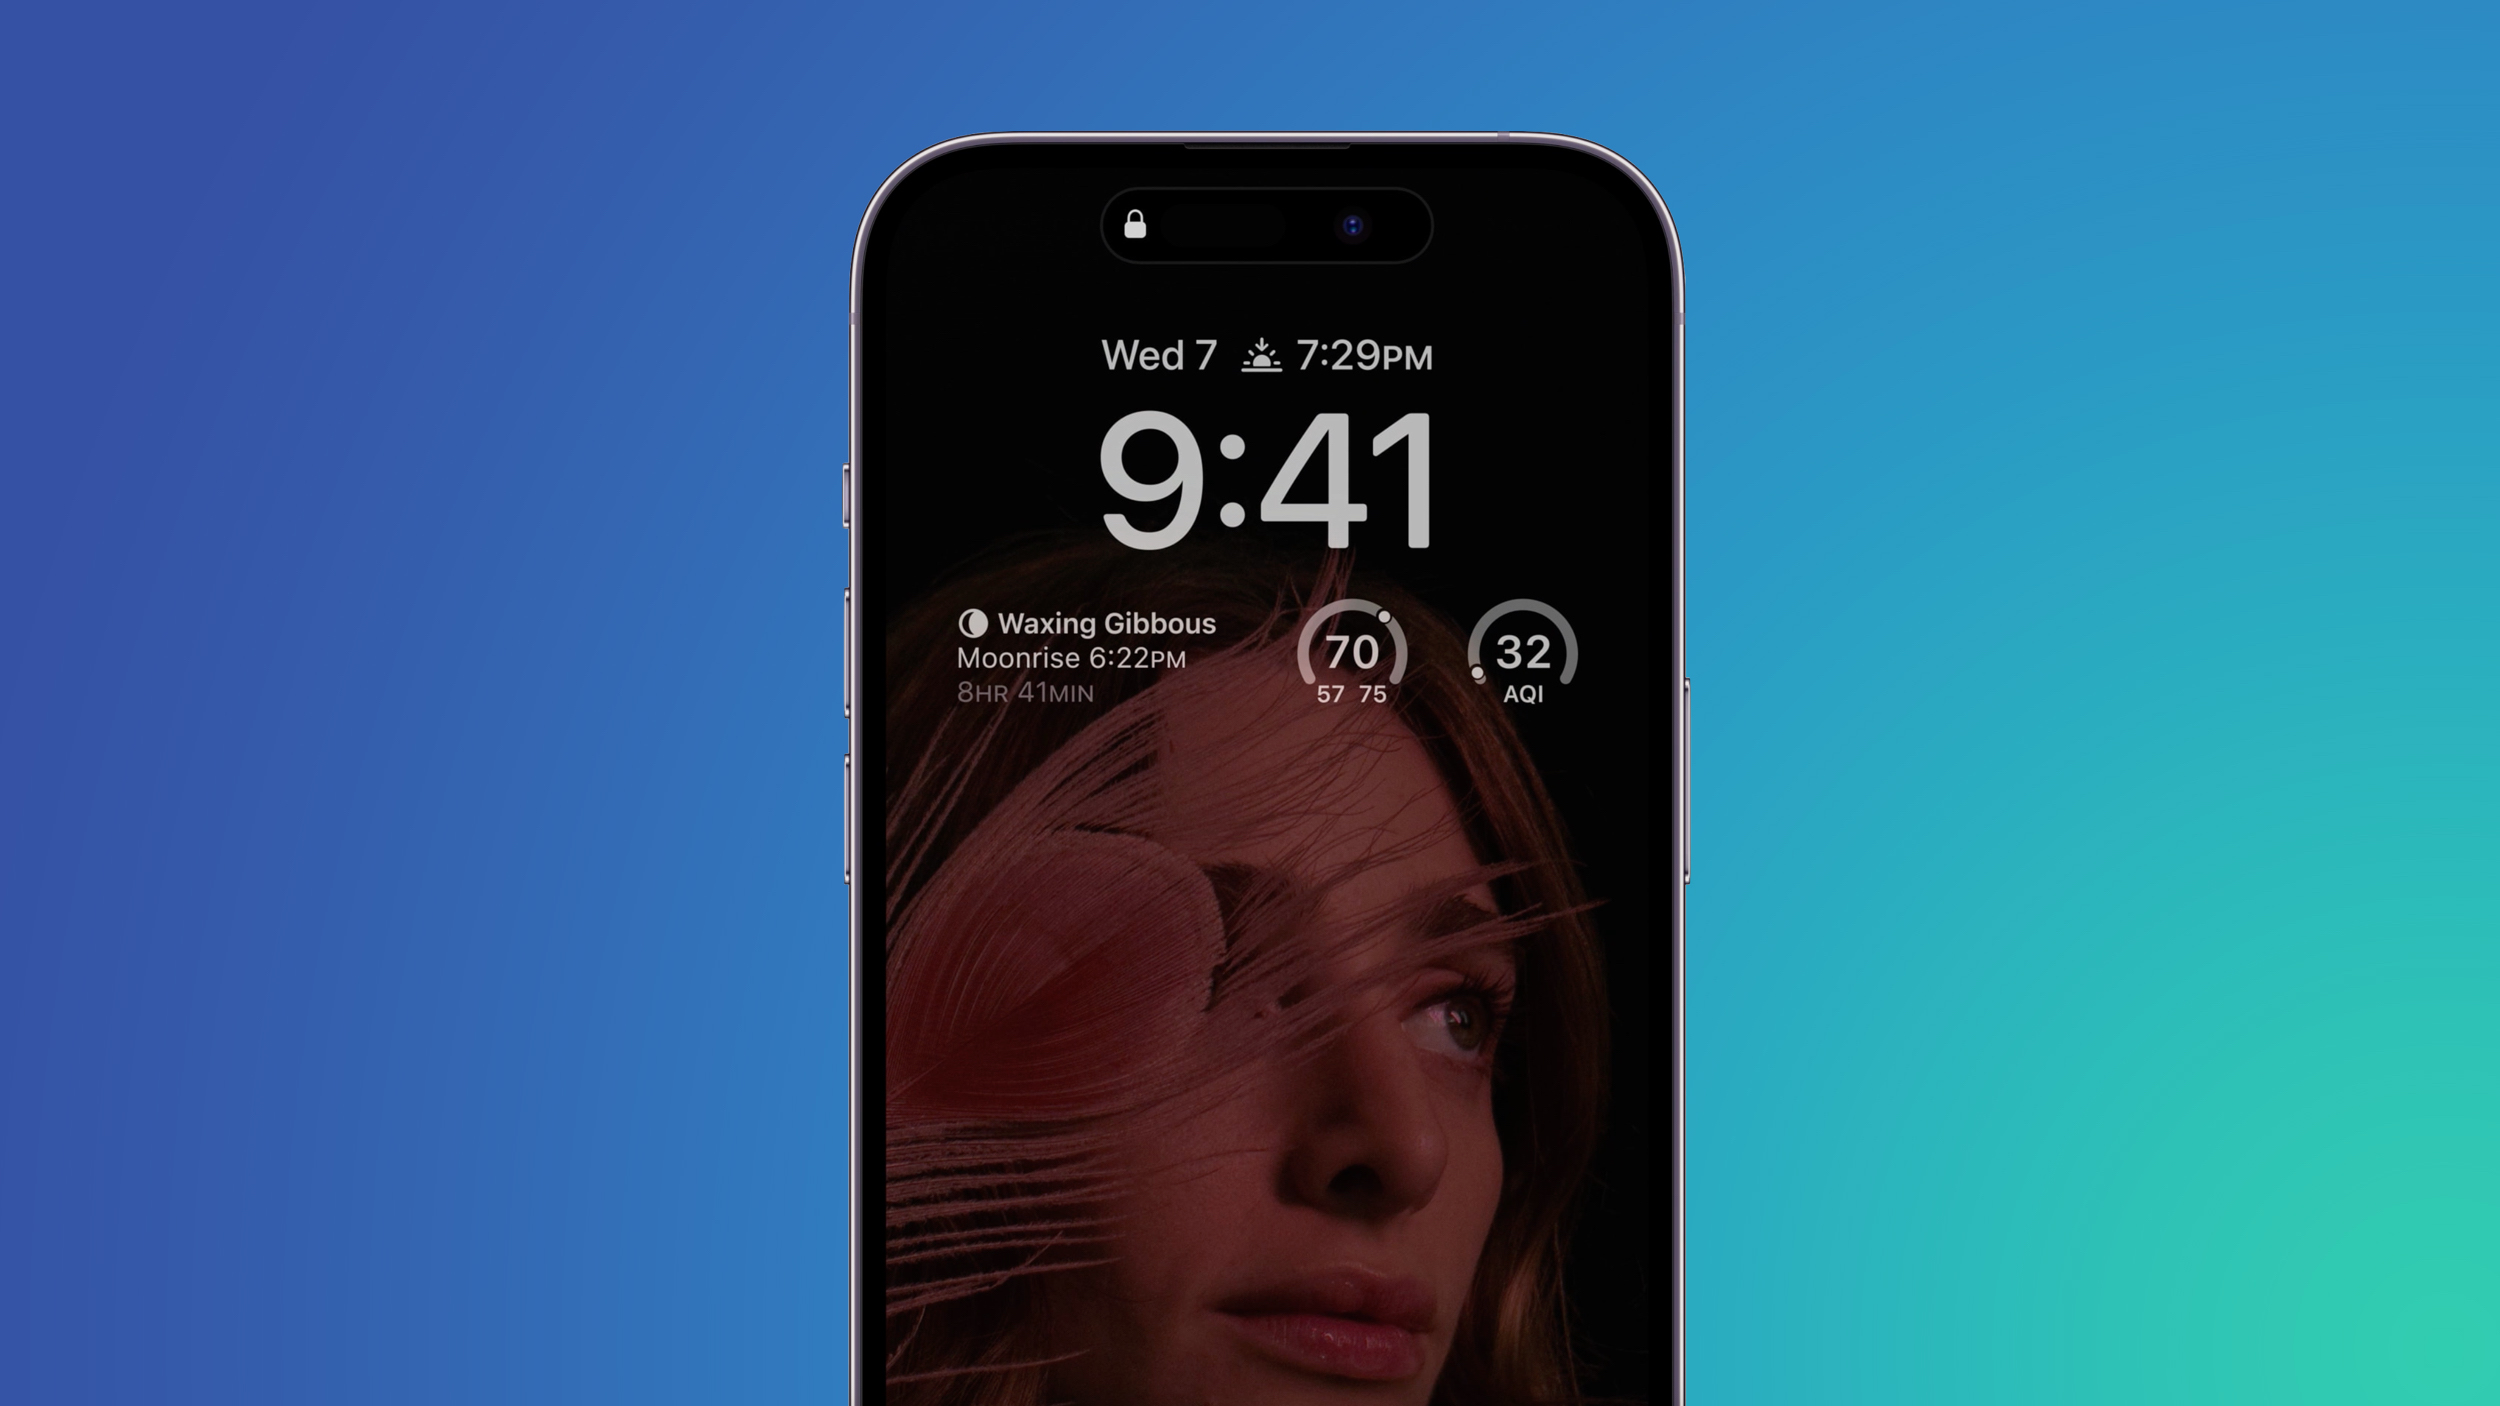 iphone 14 display